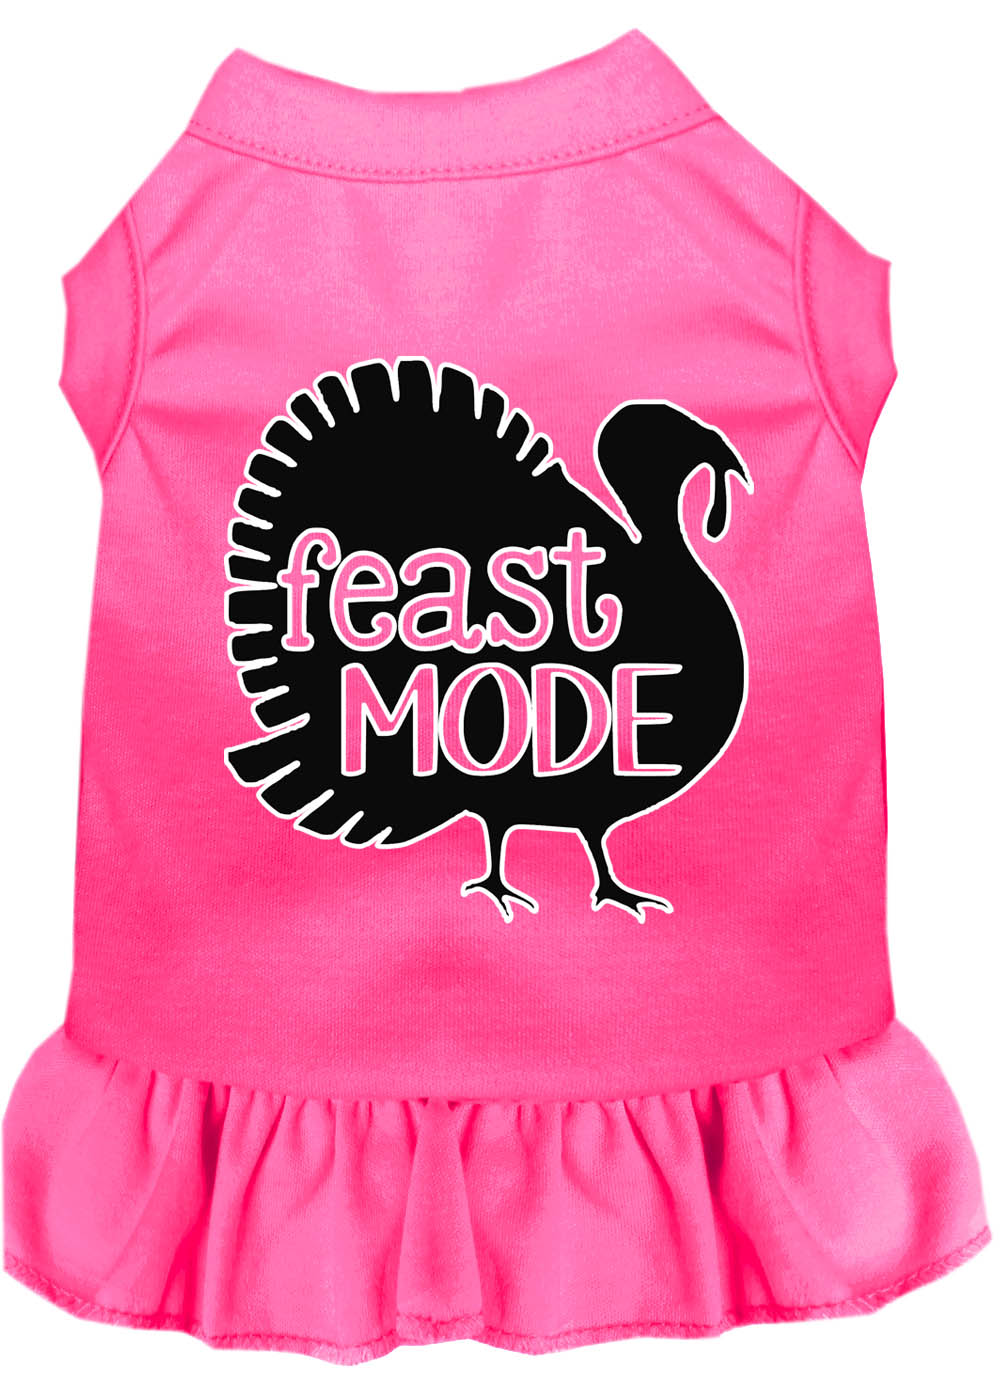 Feast Mode Screen Print Dog Dress Bright Pink XL